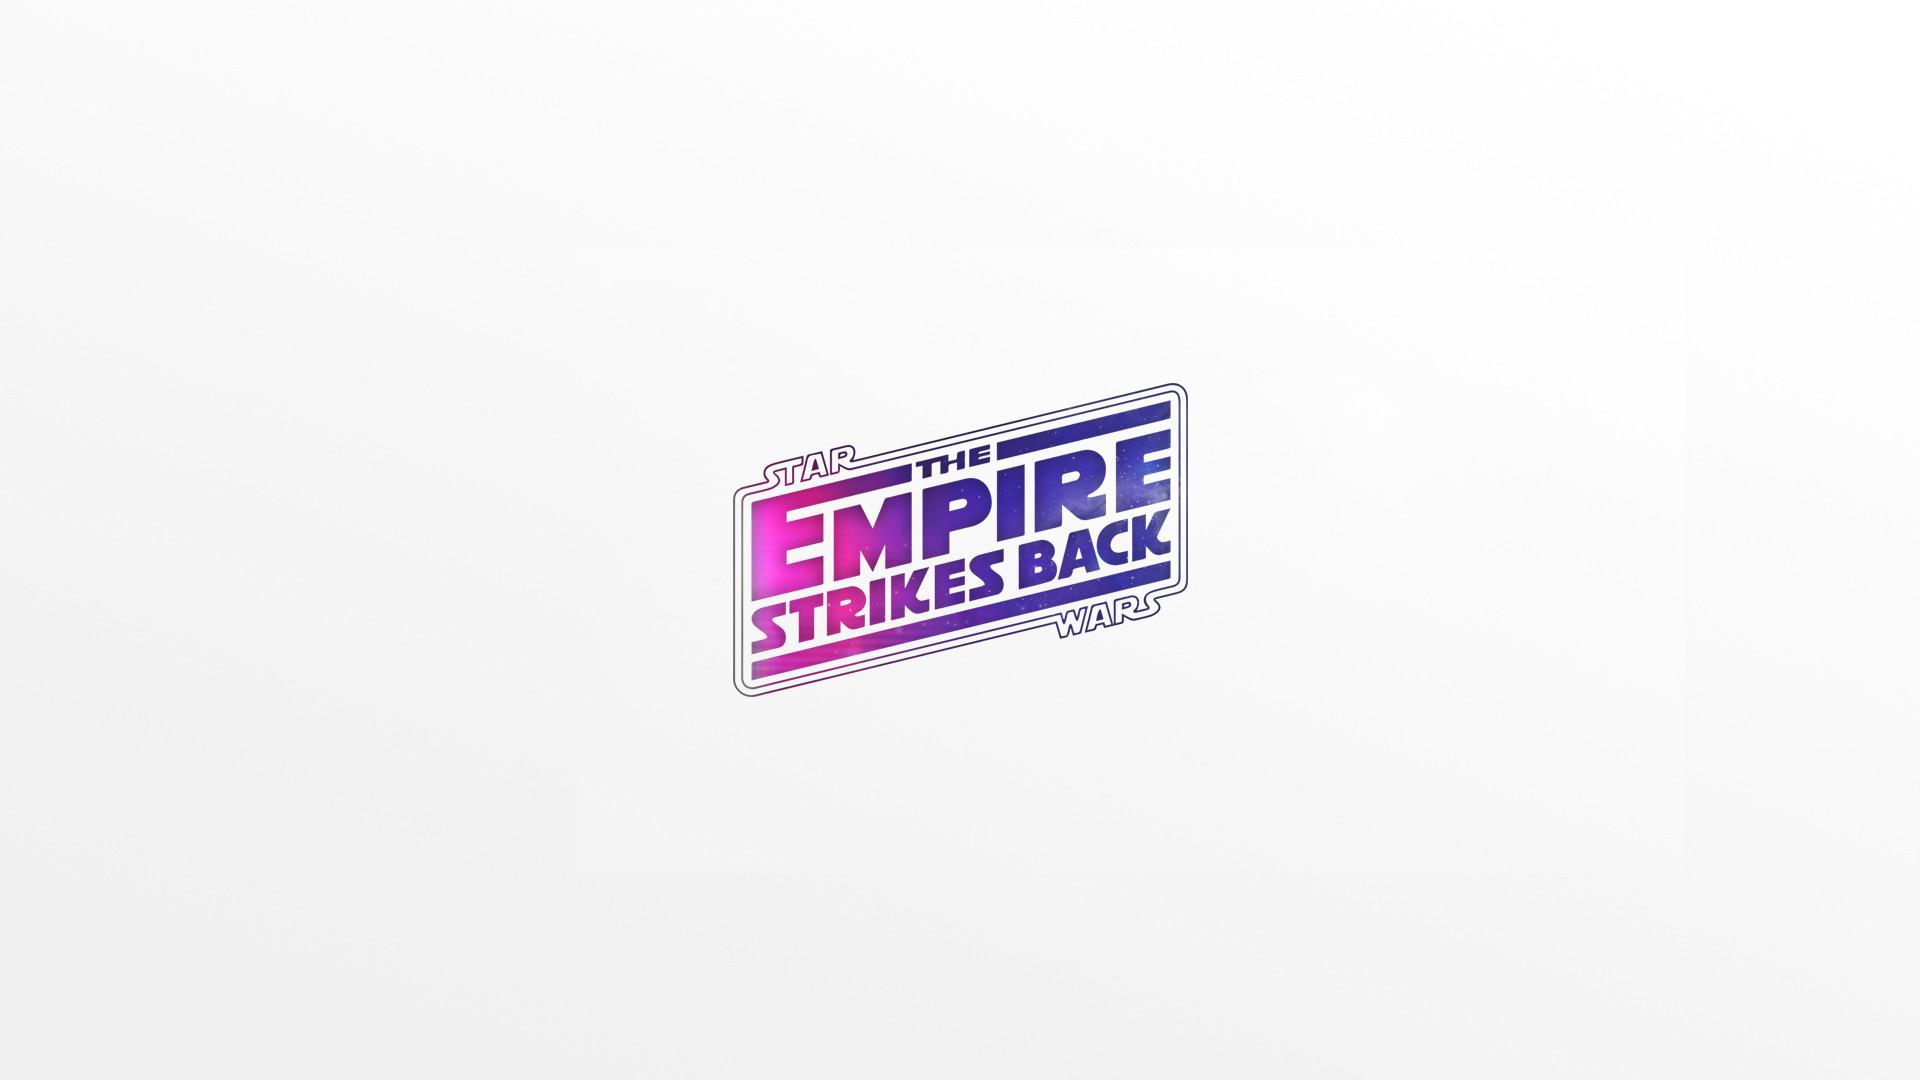 Star Wars Episode V: The Empire Strikes Back Wallpaper, Picture